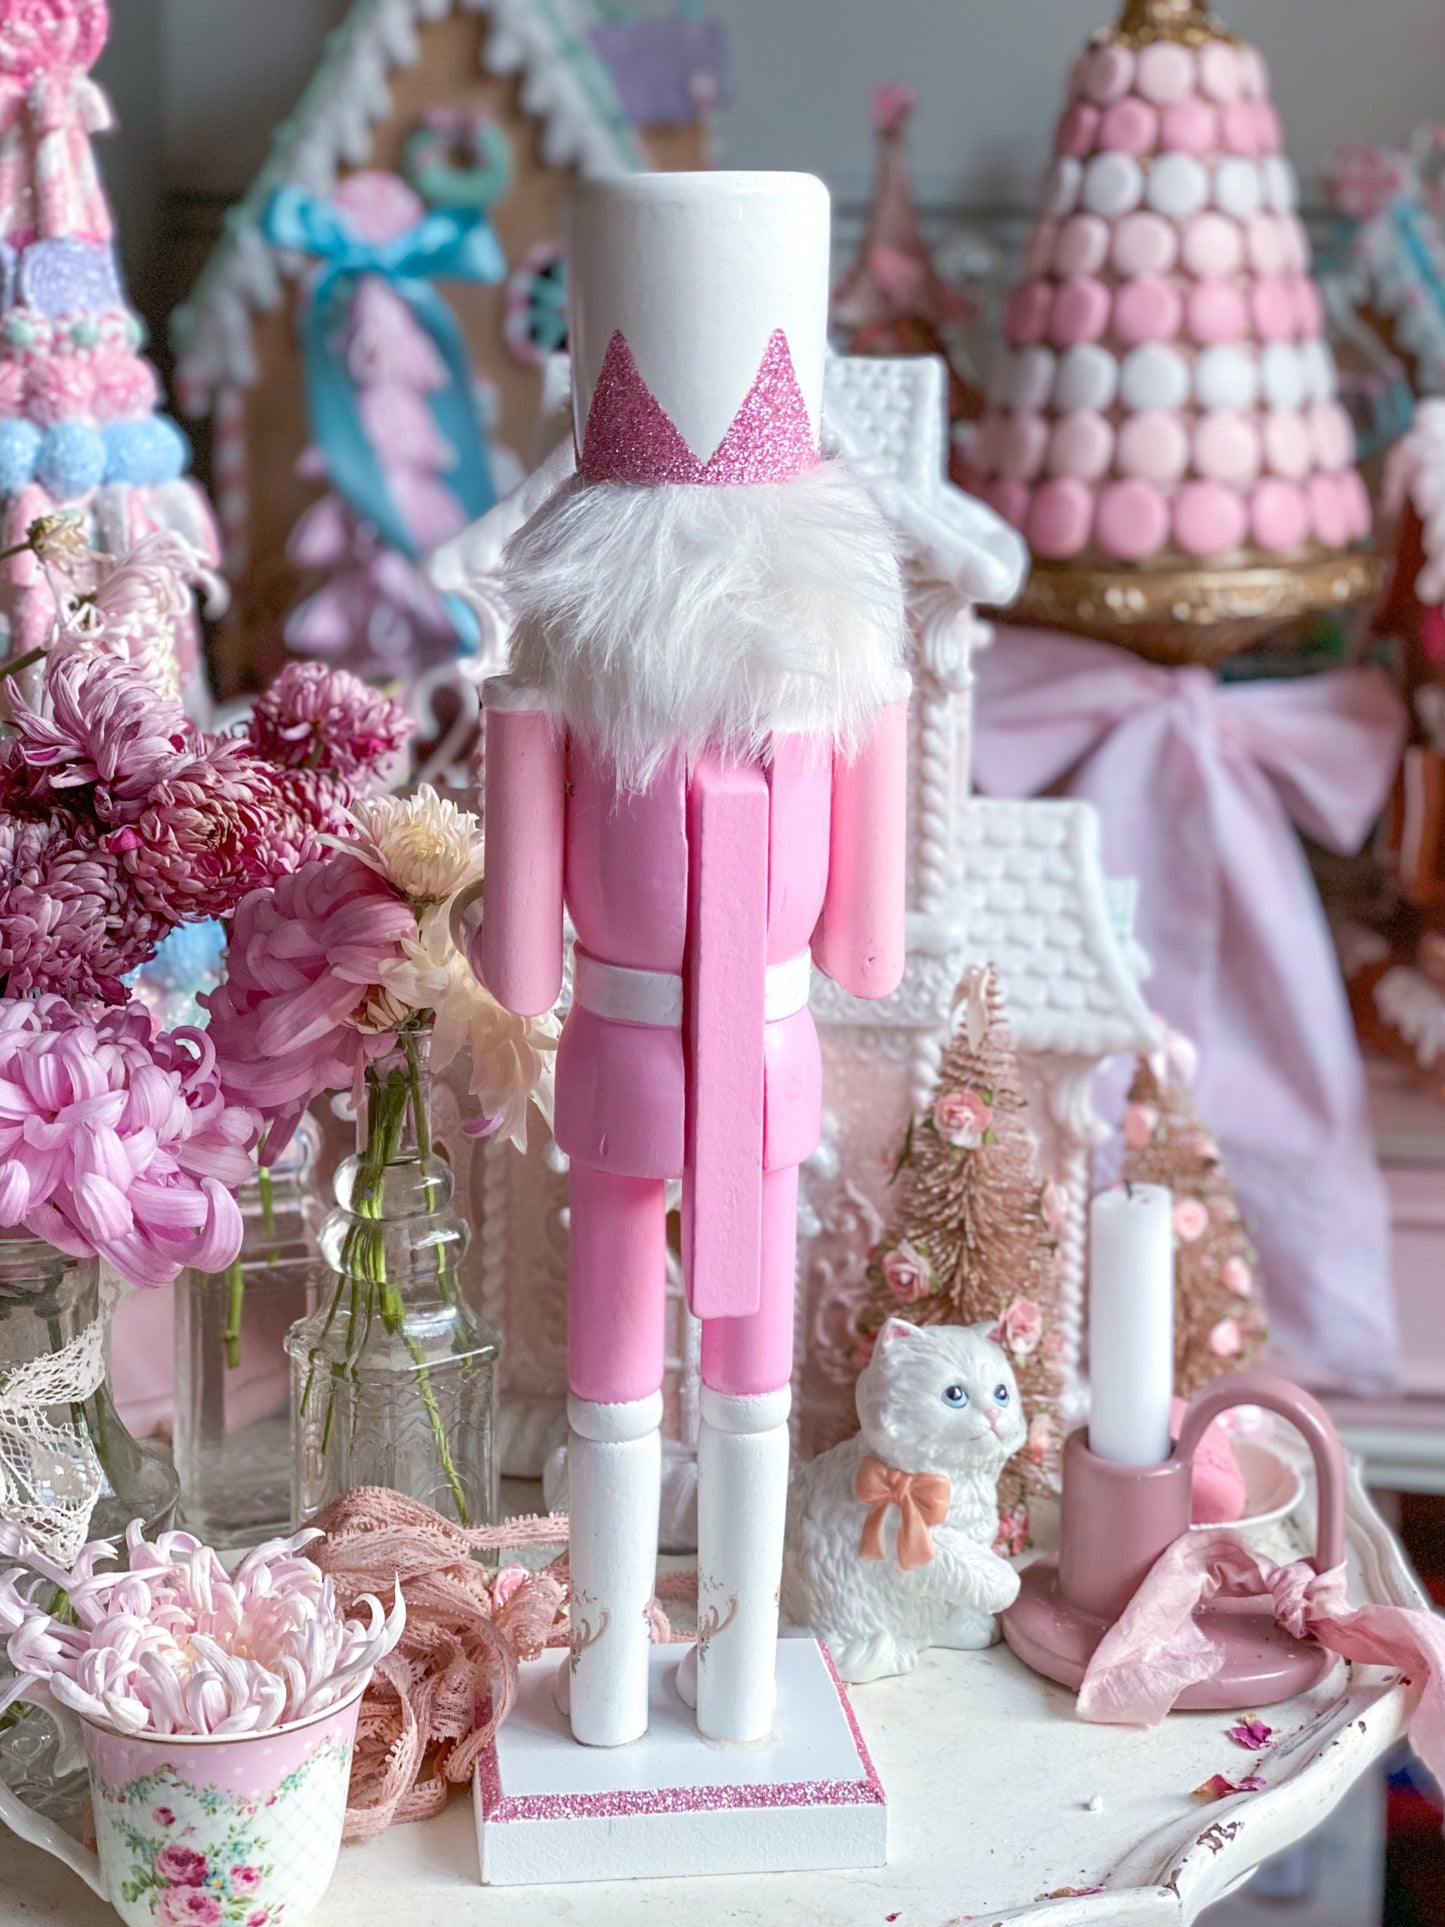 Bespoke Pastel Pink Glitter Drummer Nutcracker with Floral Boots